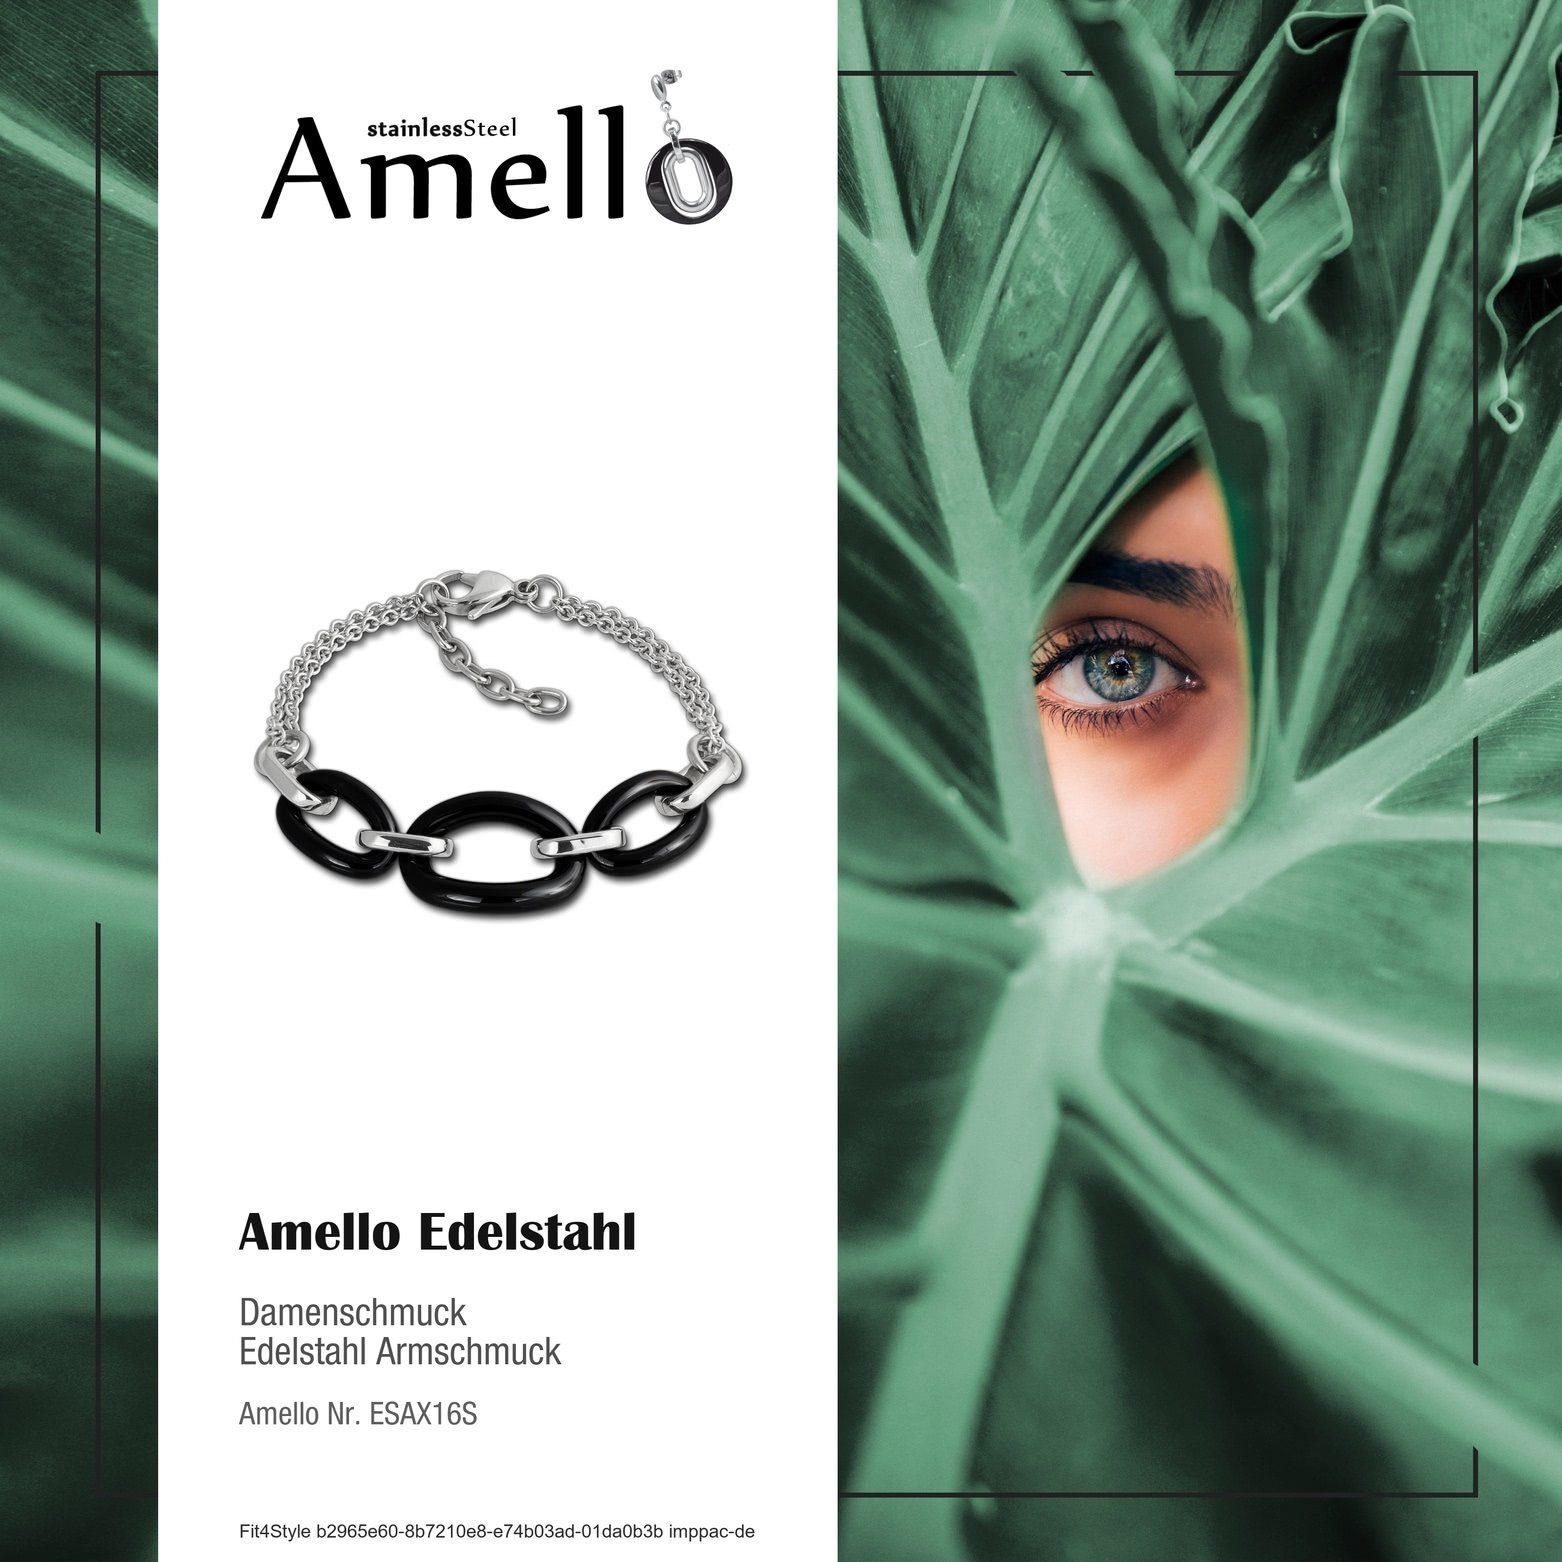 Amello (Stainless silber Armband Damen für (Armband), Amello Ovale Steel) Armbänder Edelstahl schwarz Edelstahlarmband